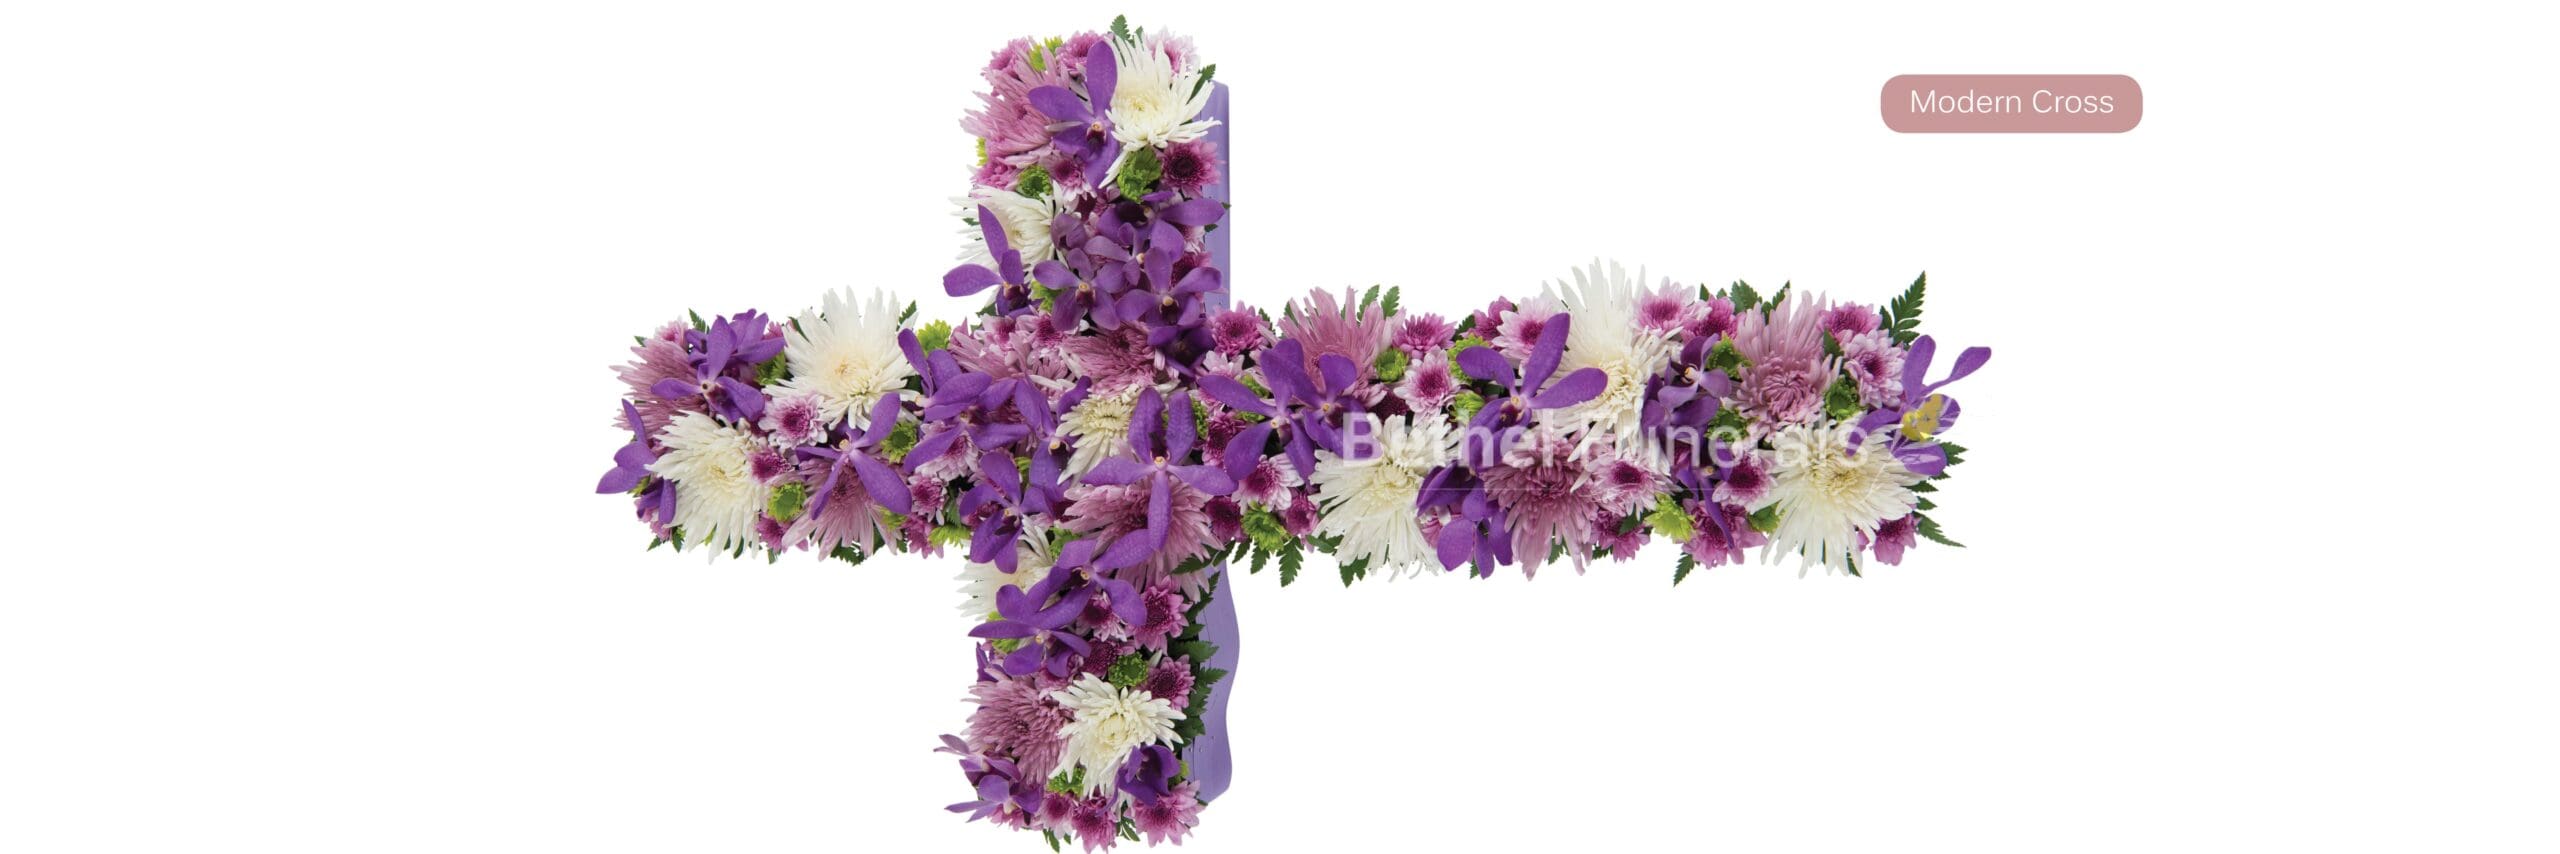 Modern Cross funeral flowers